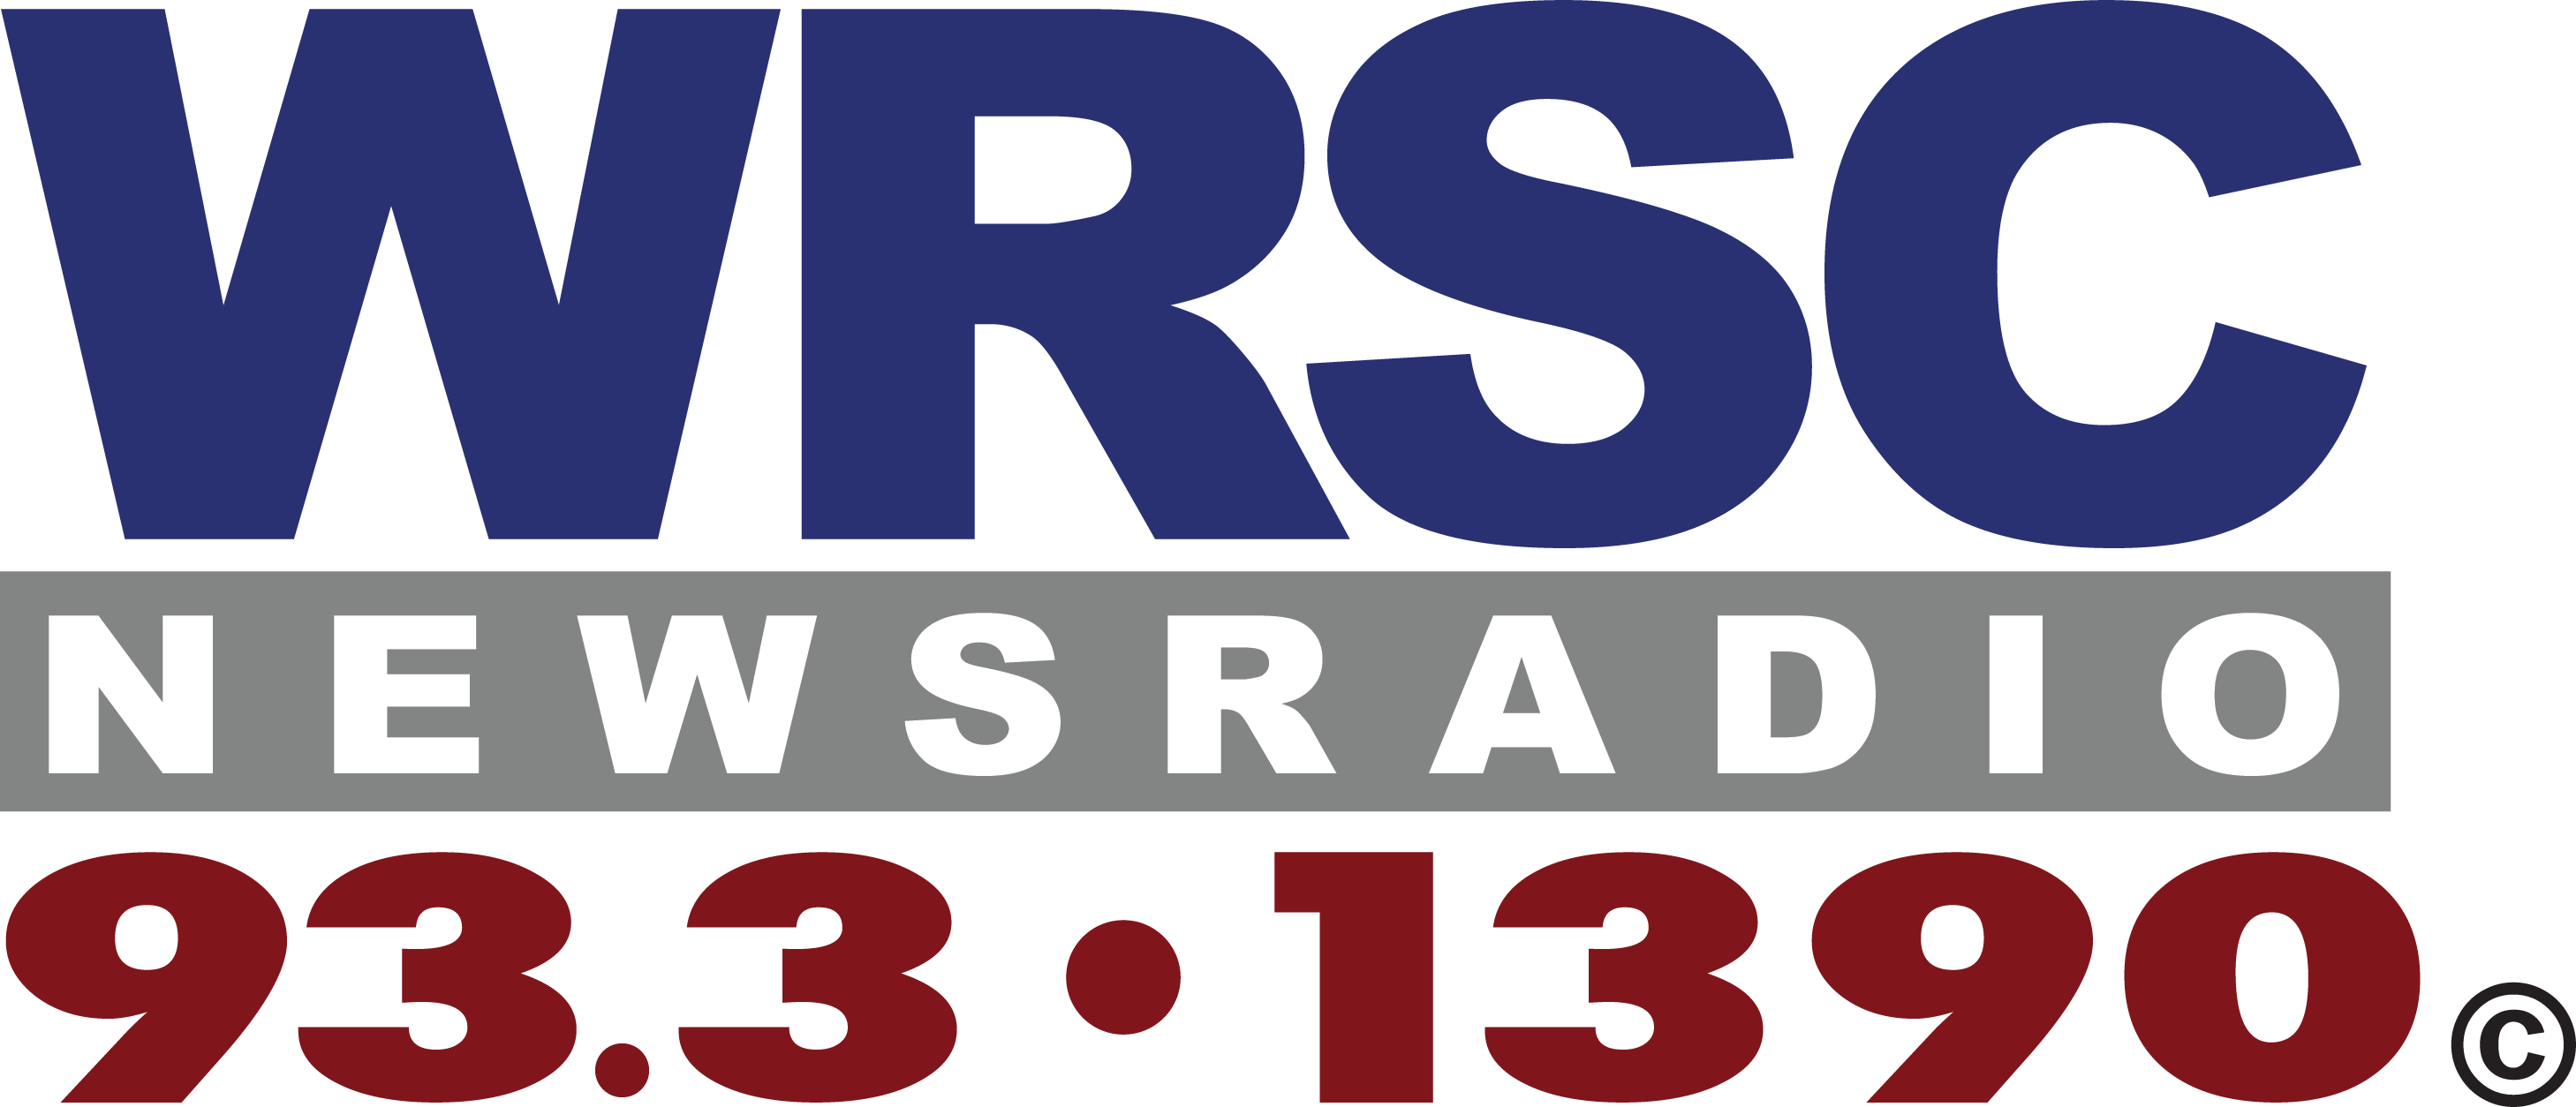 News Radio 93.3 & 1390 WRSC